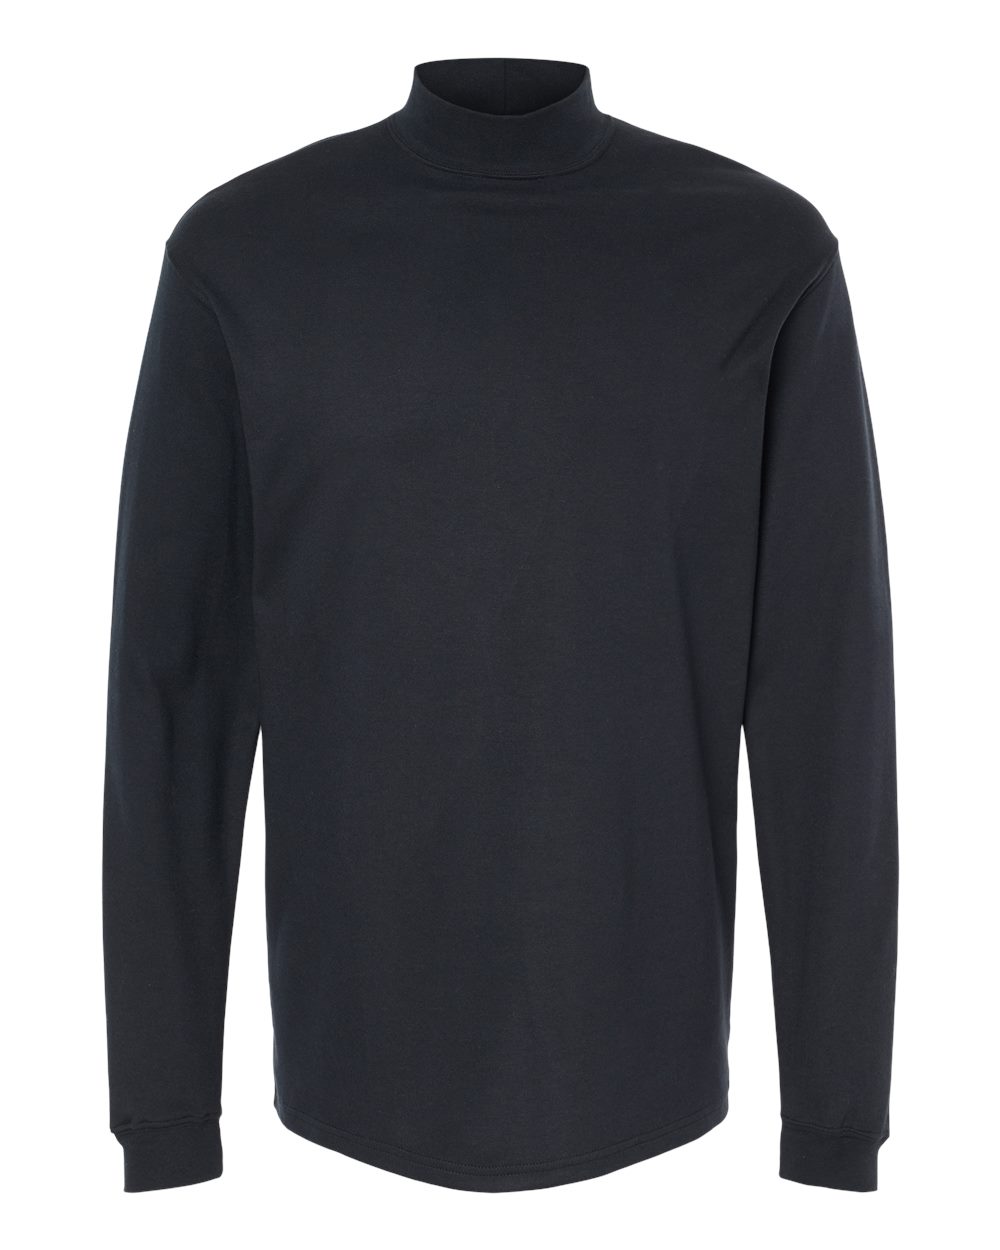 King Fashion KF4600 - Jersey Interlock Mockneck Long Sleeve T-Shirt